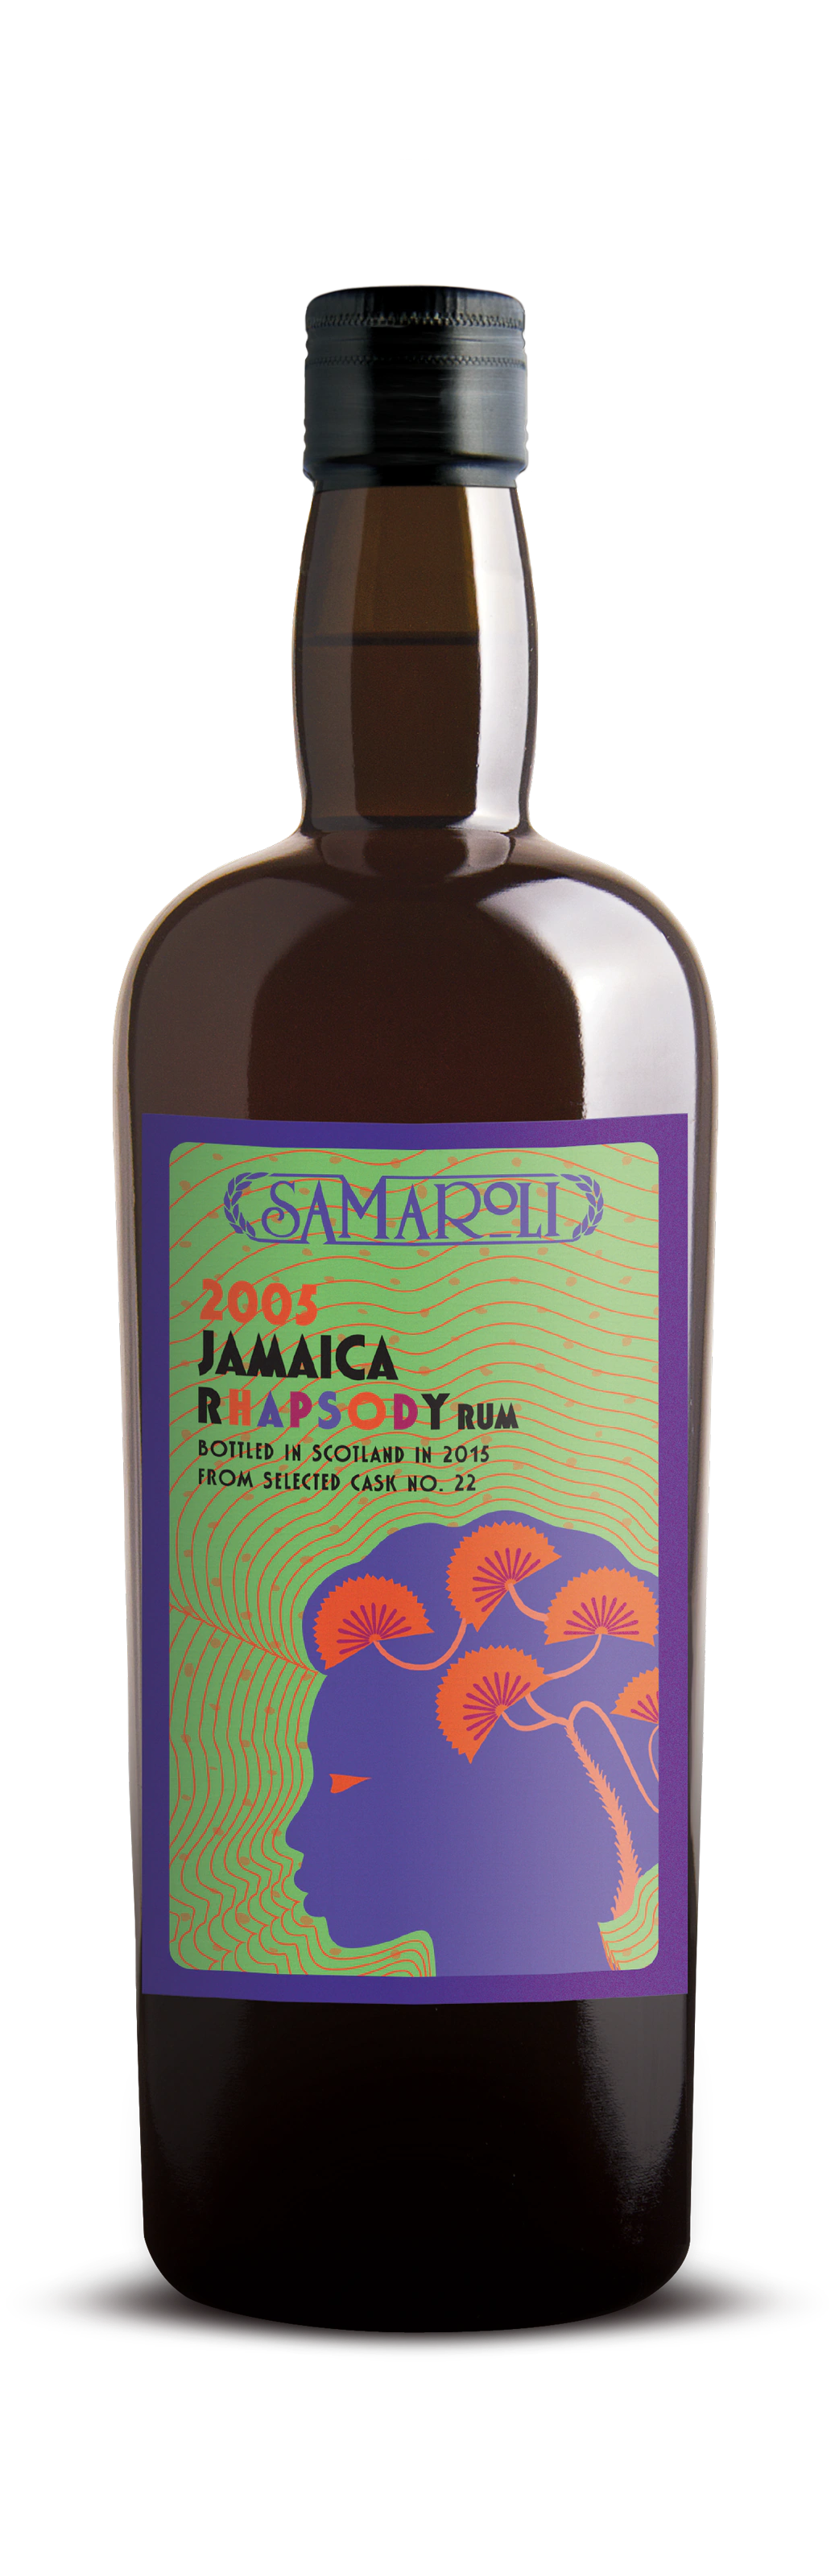 Samaroli 2005 Jamaica Rhapsody 10yo 45% 500ml